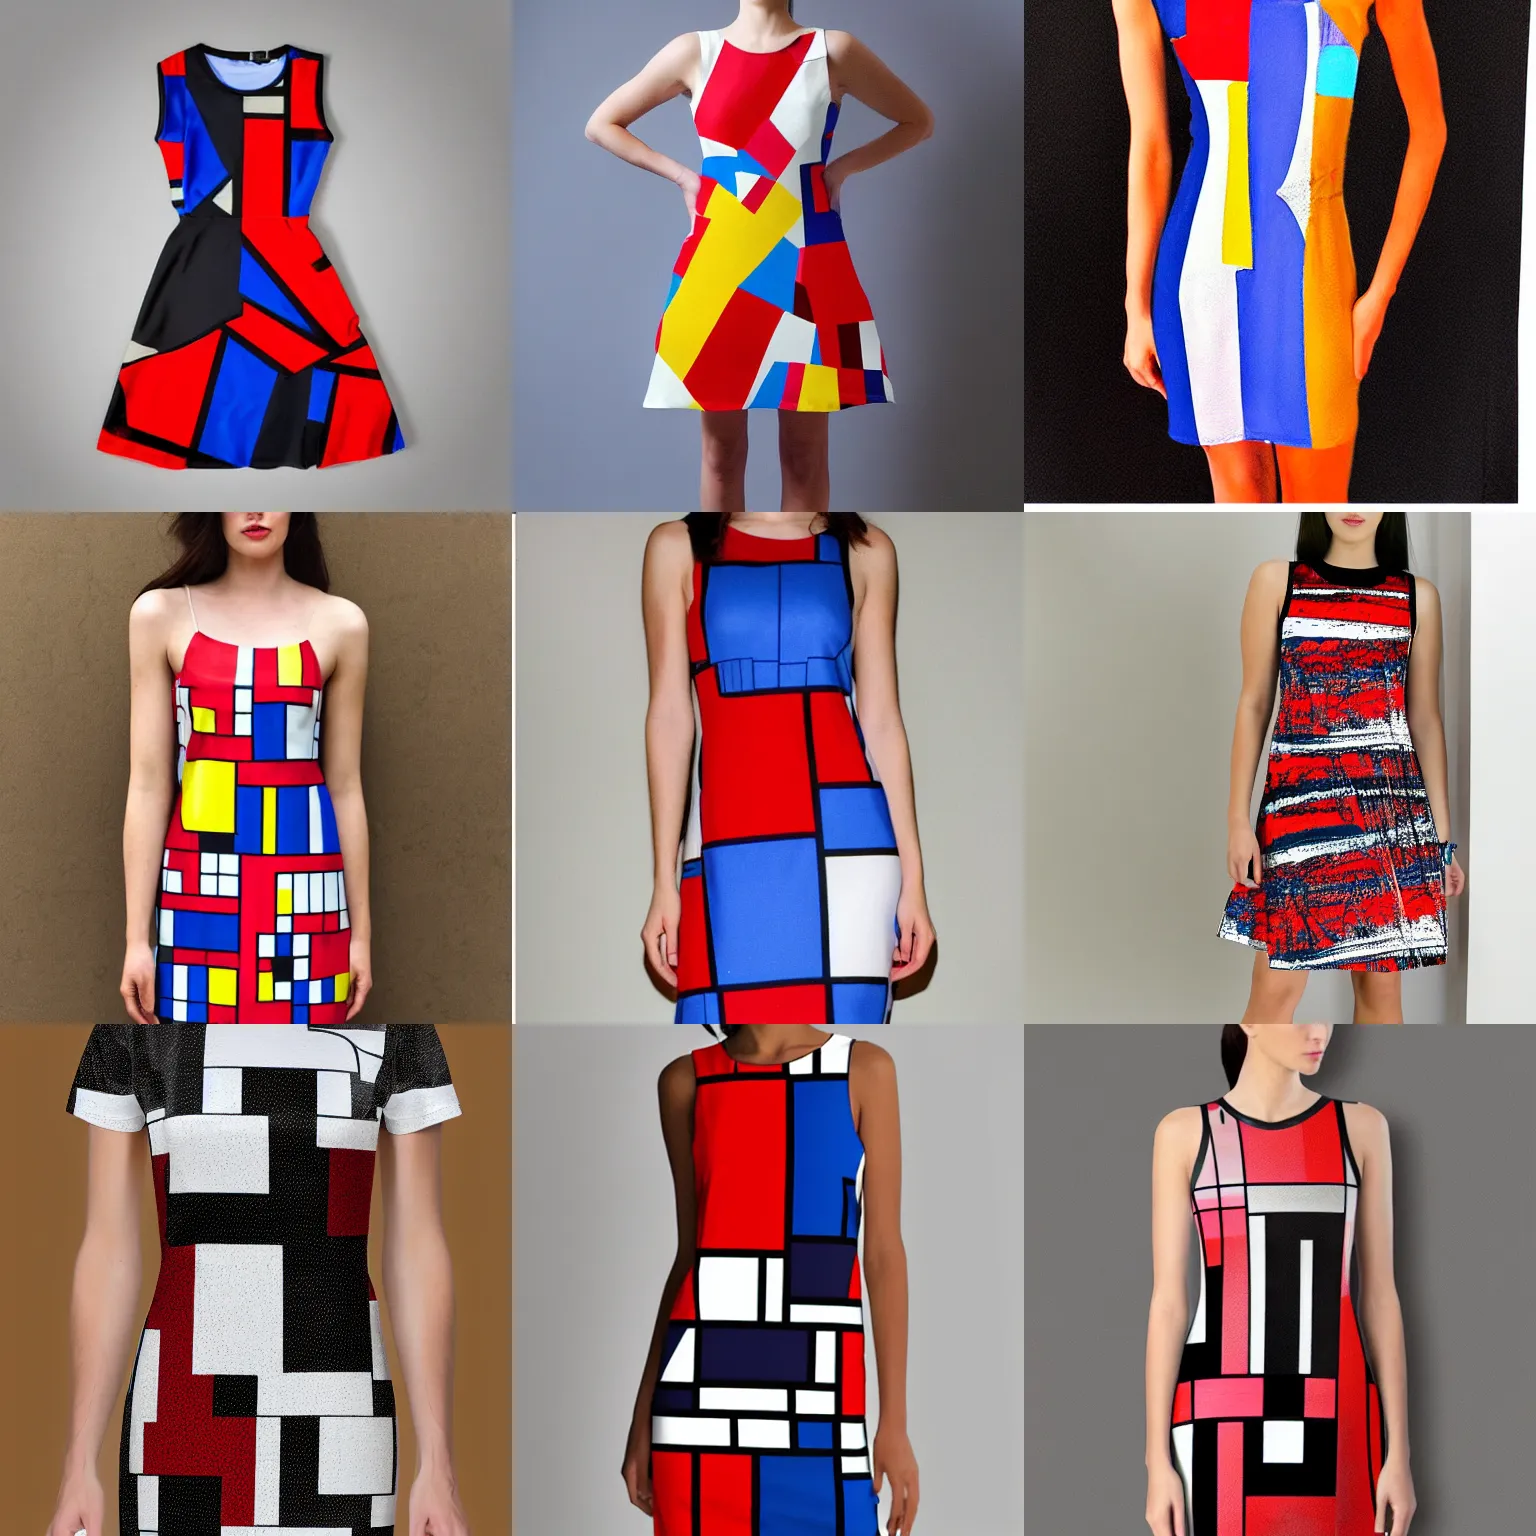 Prompt: mondrian abstract art dress